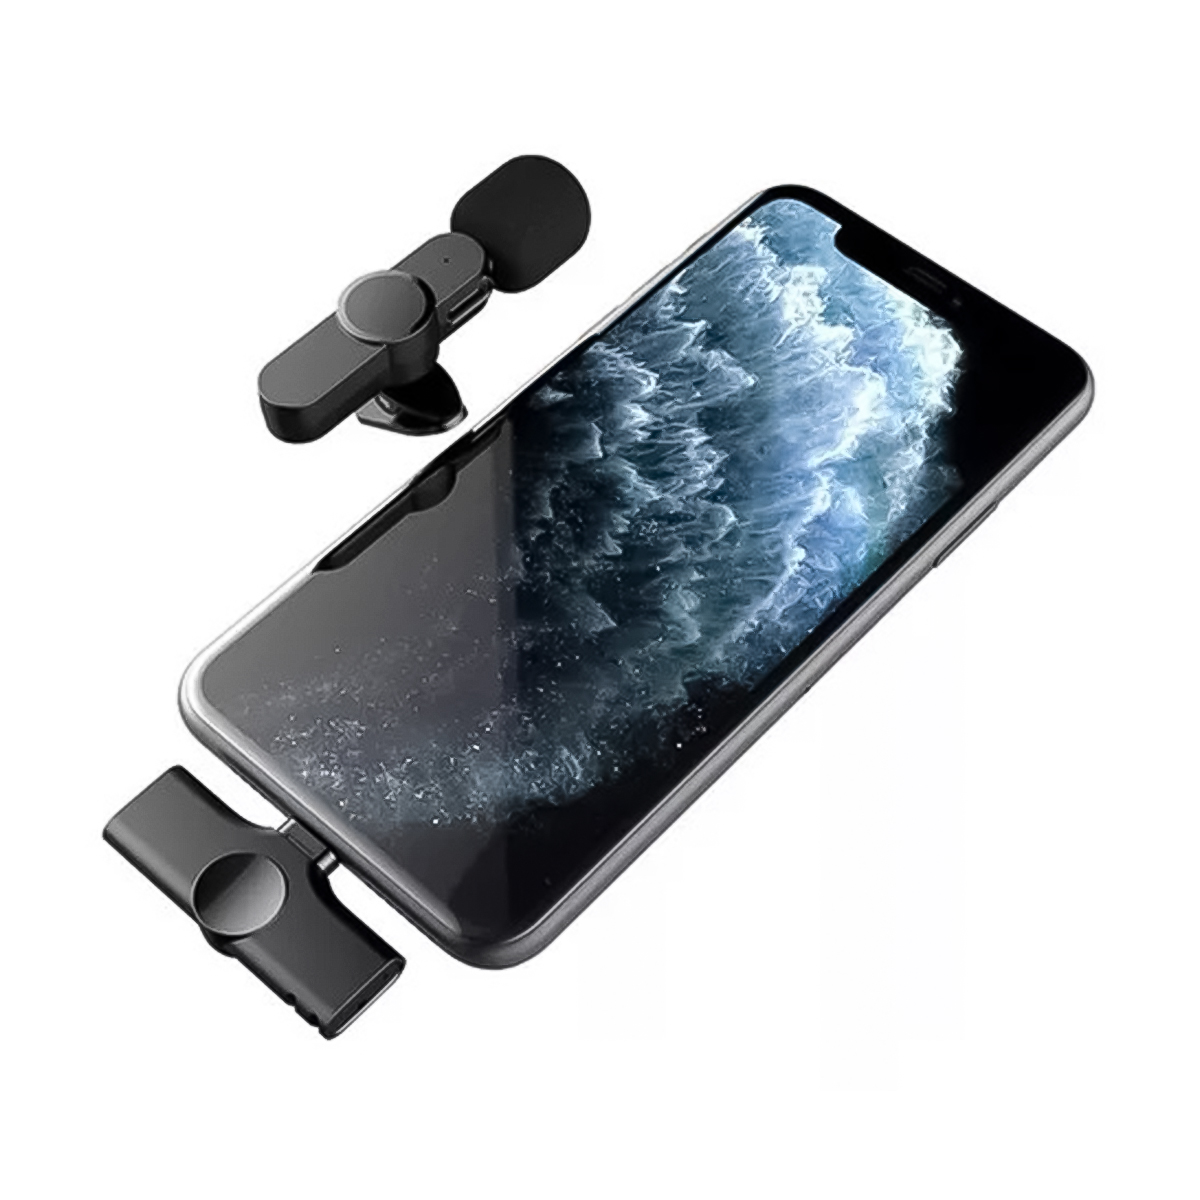 Micrófono Inalámbrico Para Celular Tipo C / iPhone - Importadora Cuevas